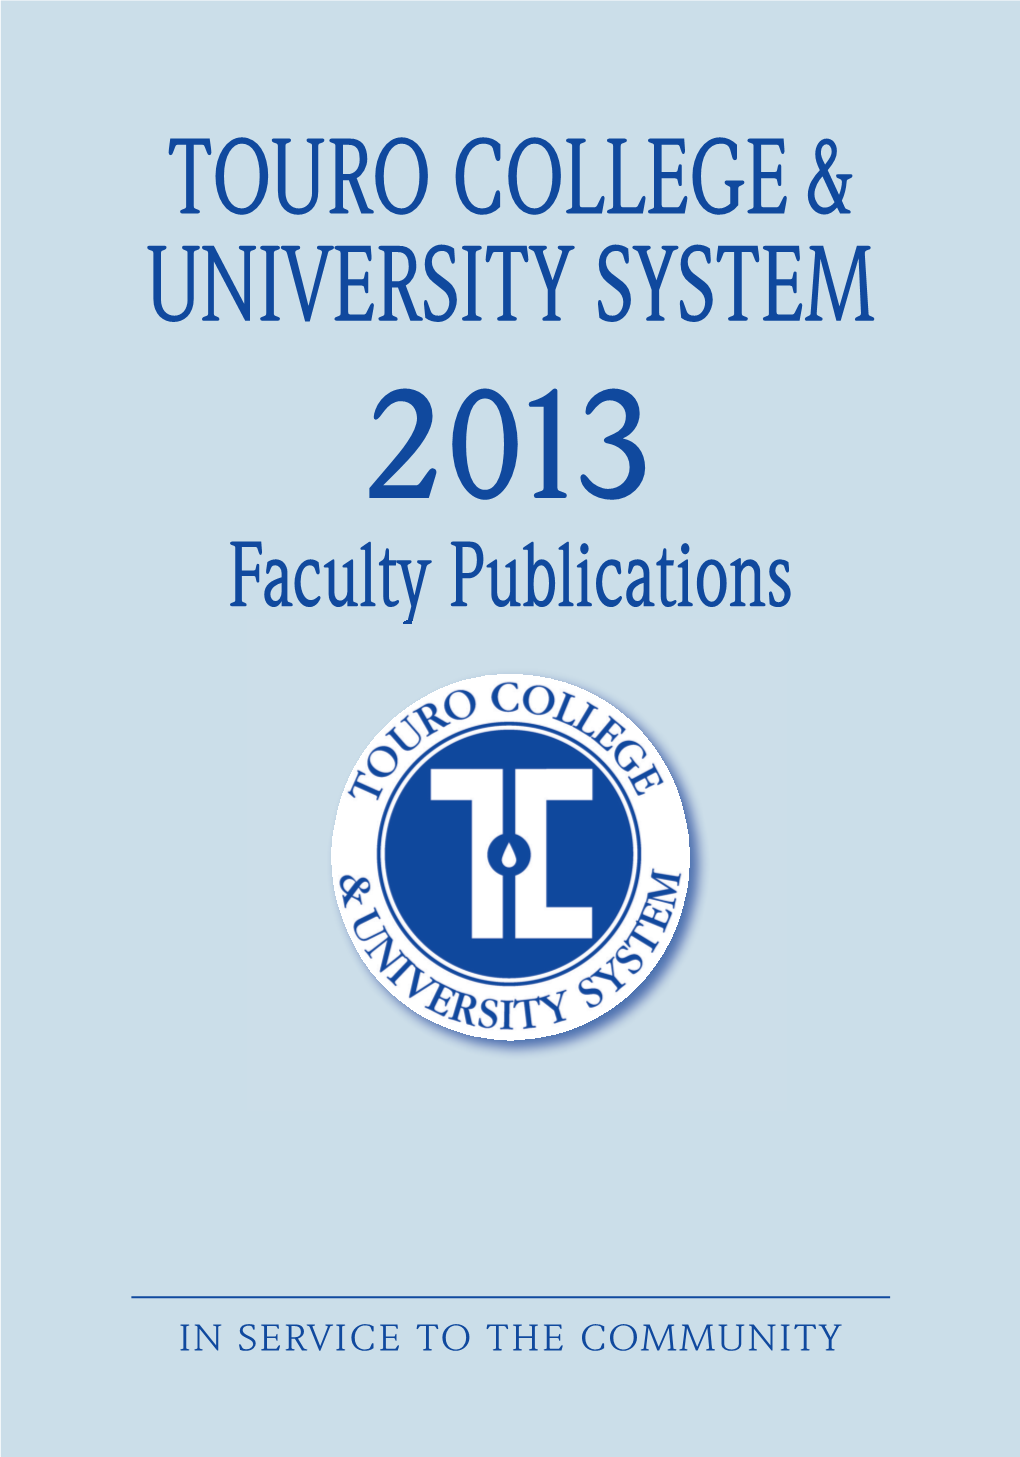 Touro College & University System